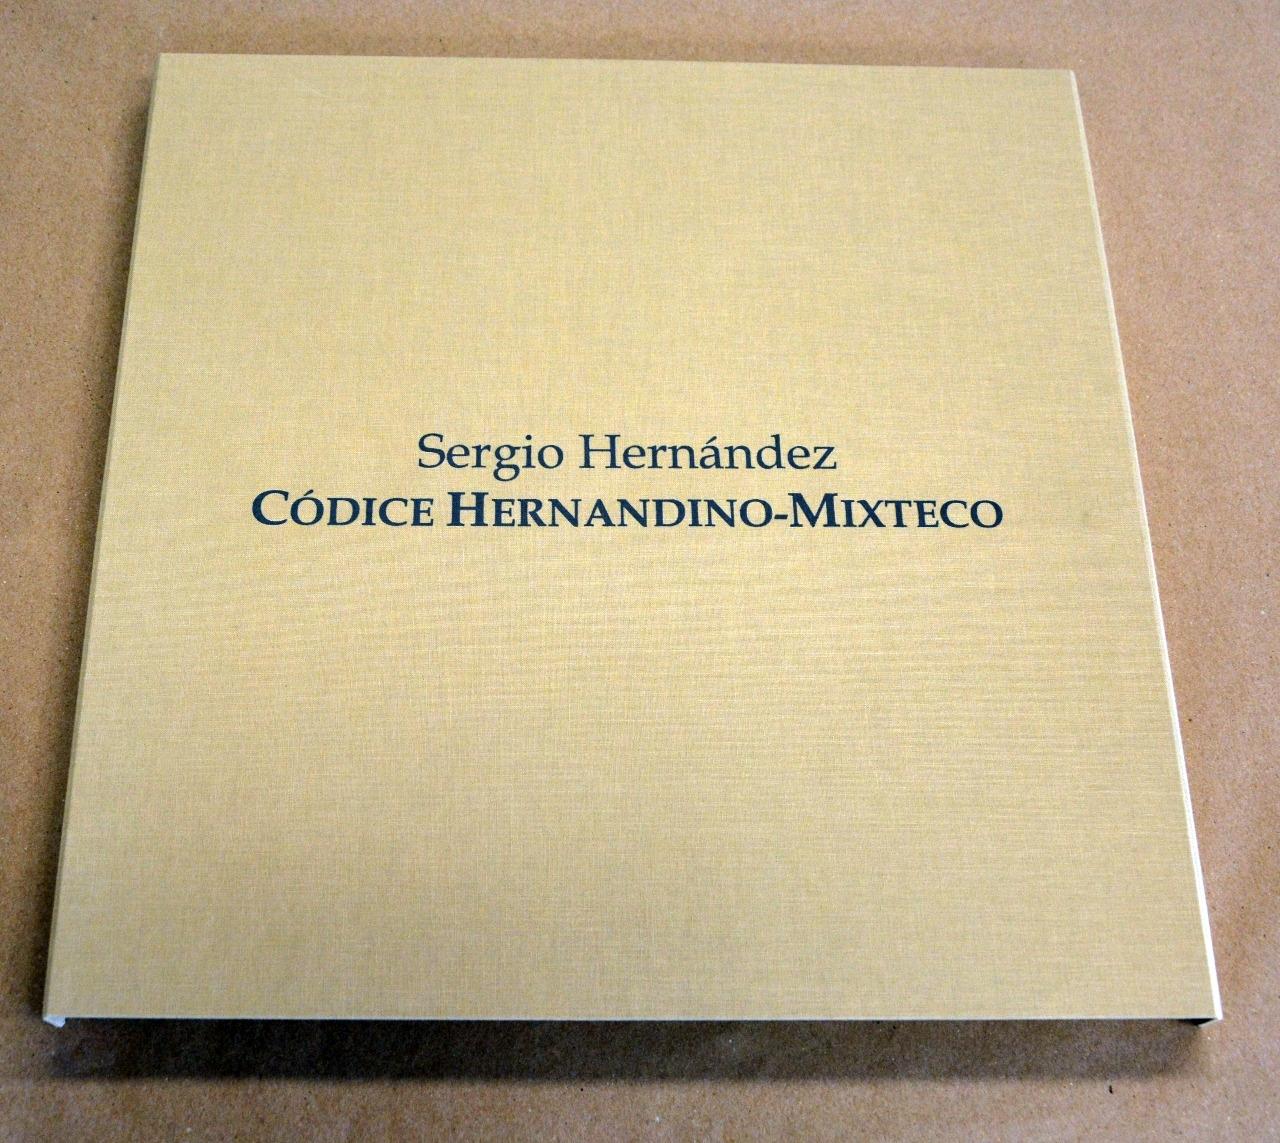 Sergio Hernández, 'Códice Hernandino-Mixteco', 2018, Silkscreen, 15.7x15.7in